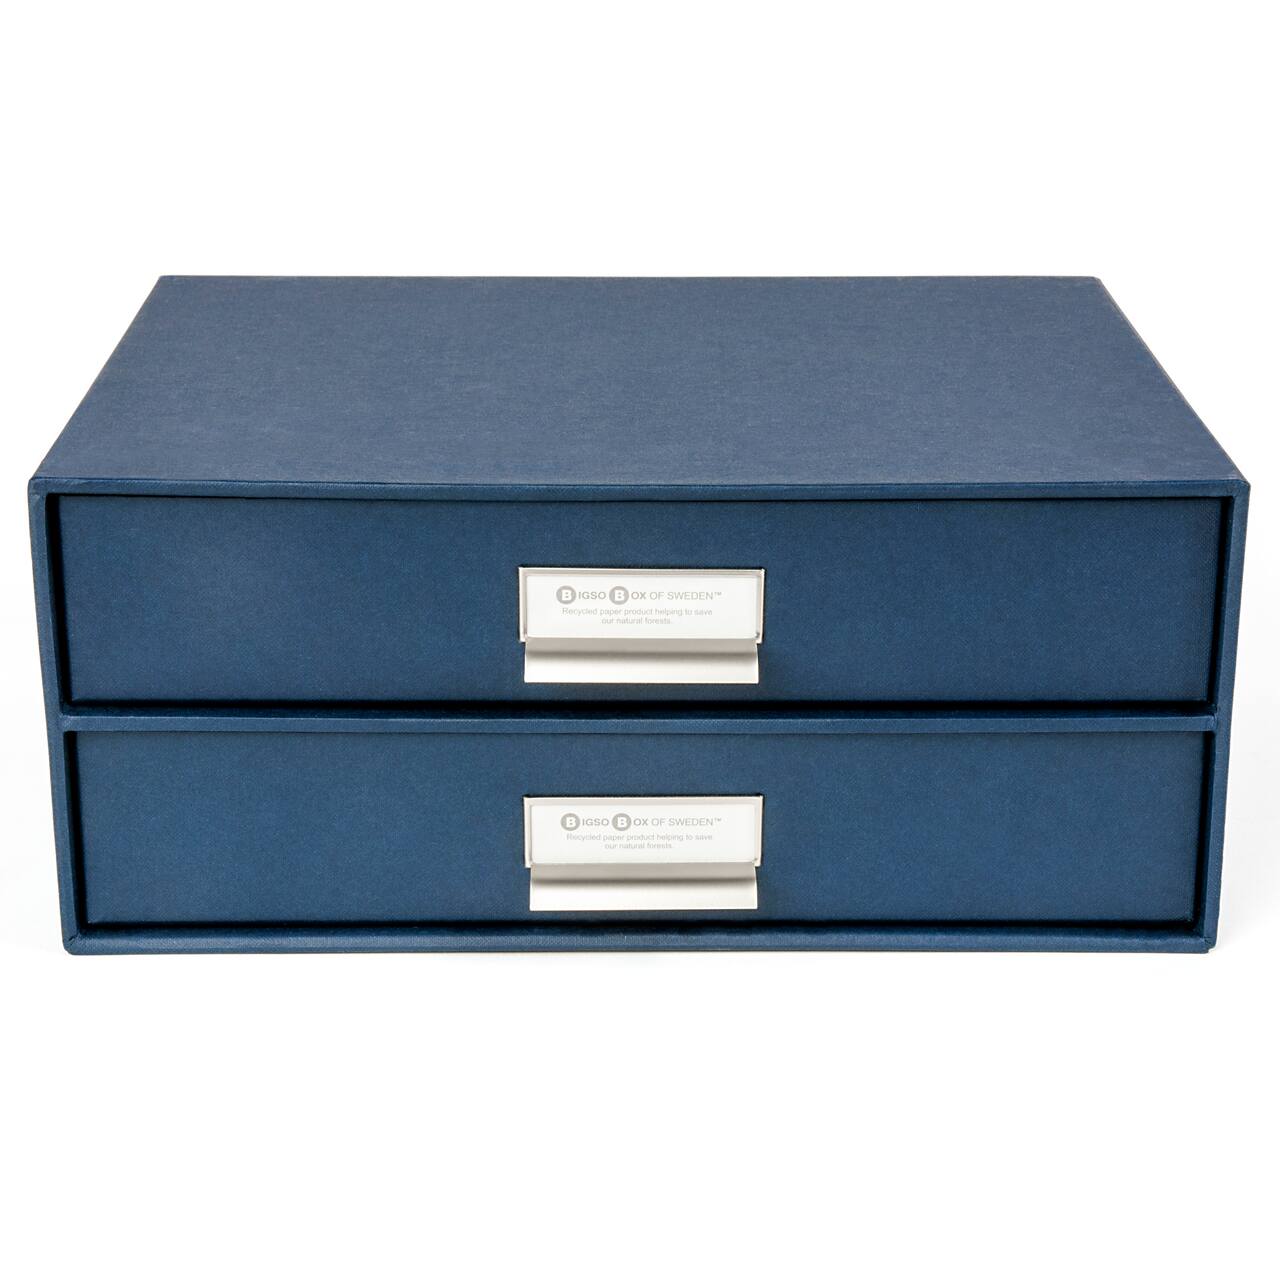 Bigso Birger 2-Drawer File Box